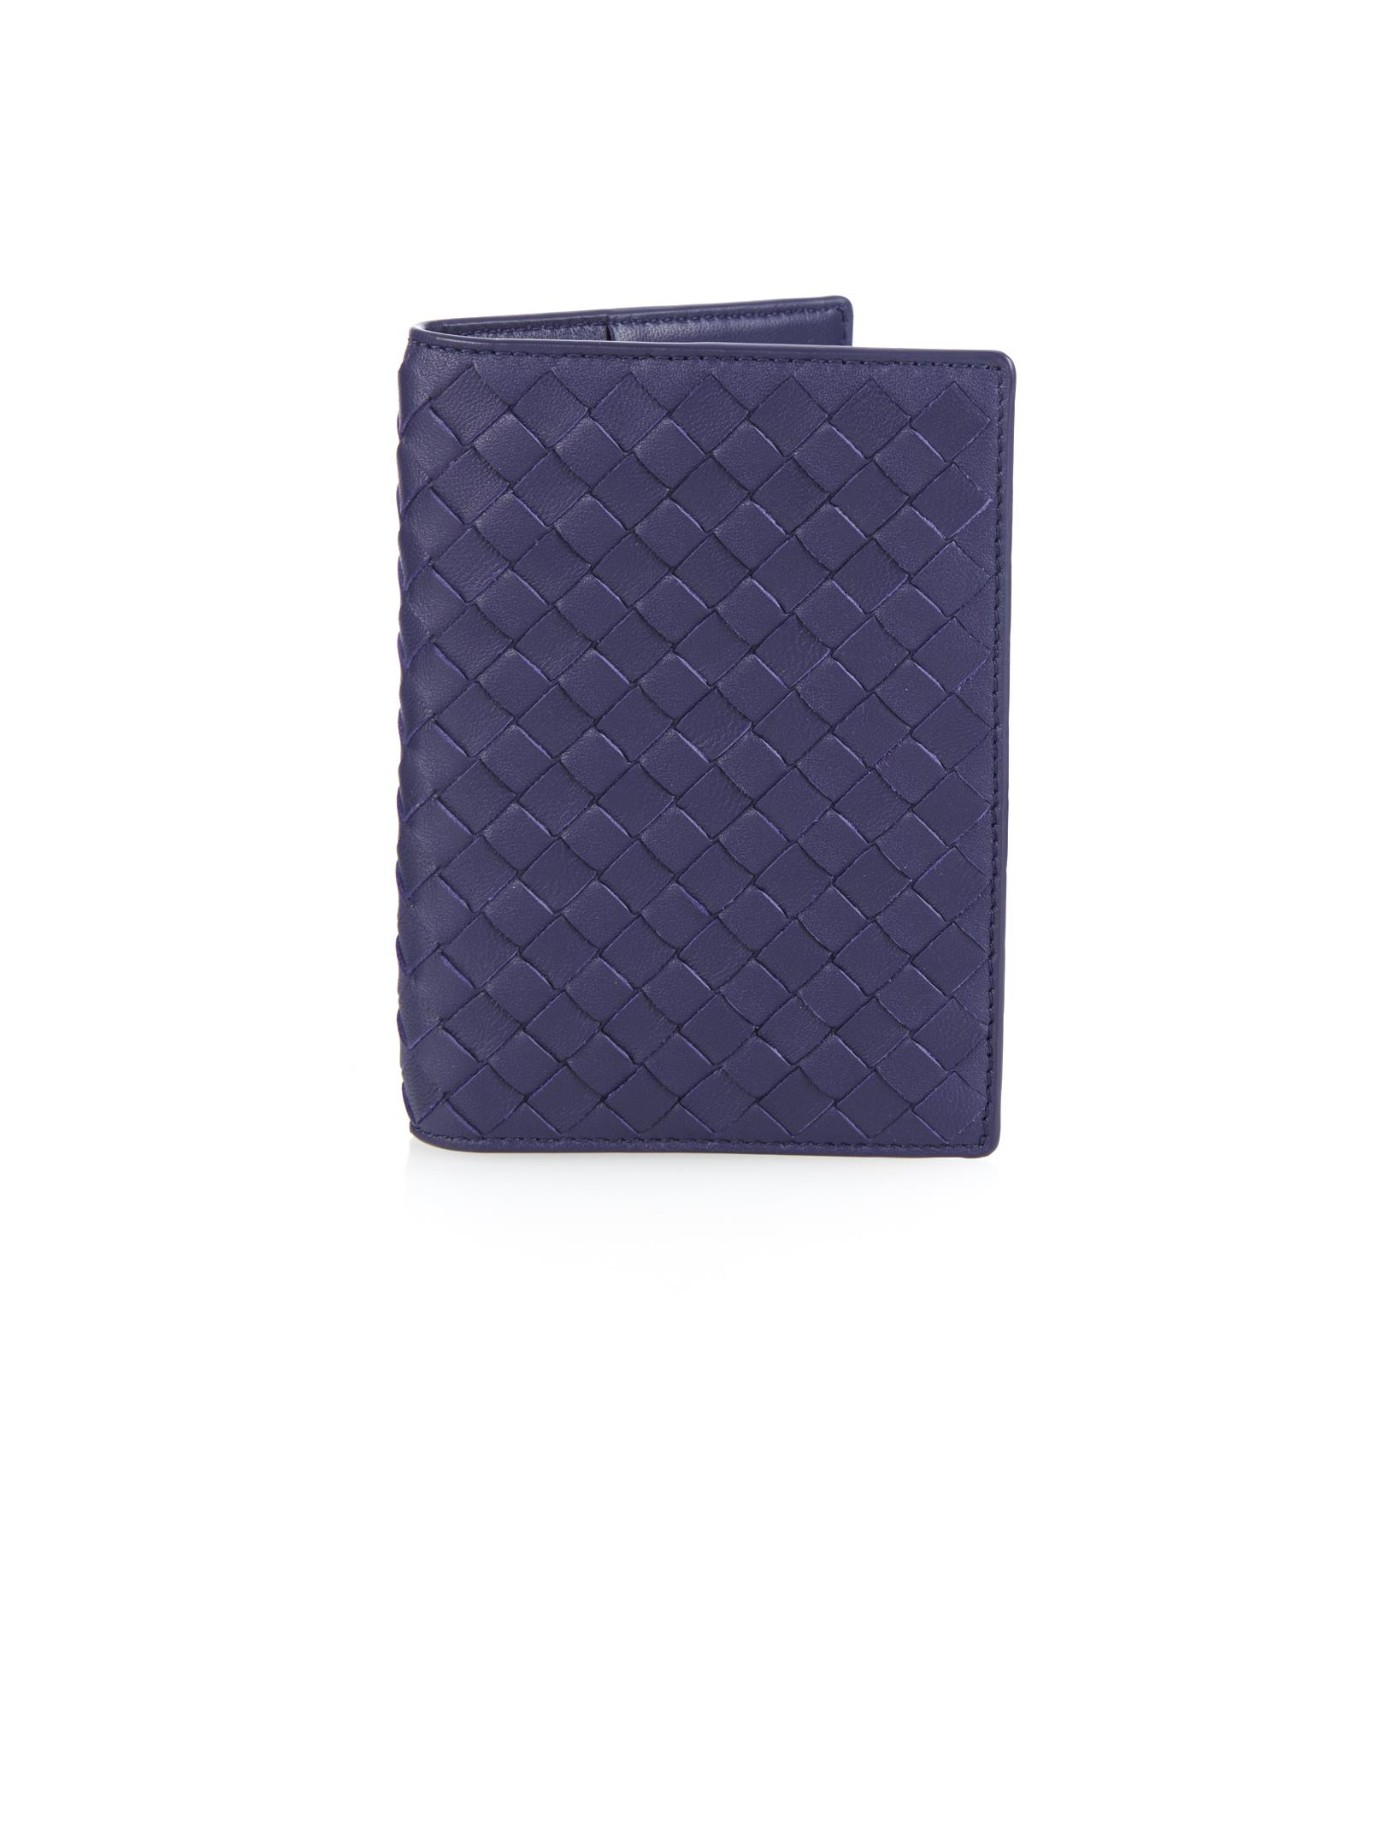 Bottega Veneta Intrecciato Leather Passport Cover in Blue for Men | Lyst